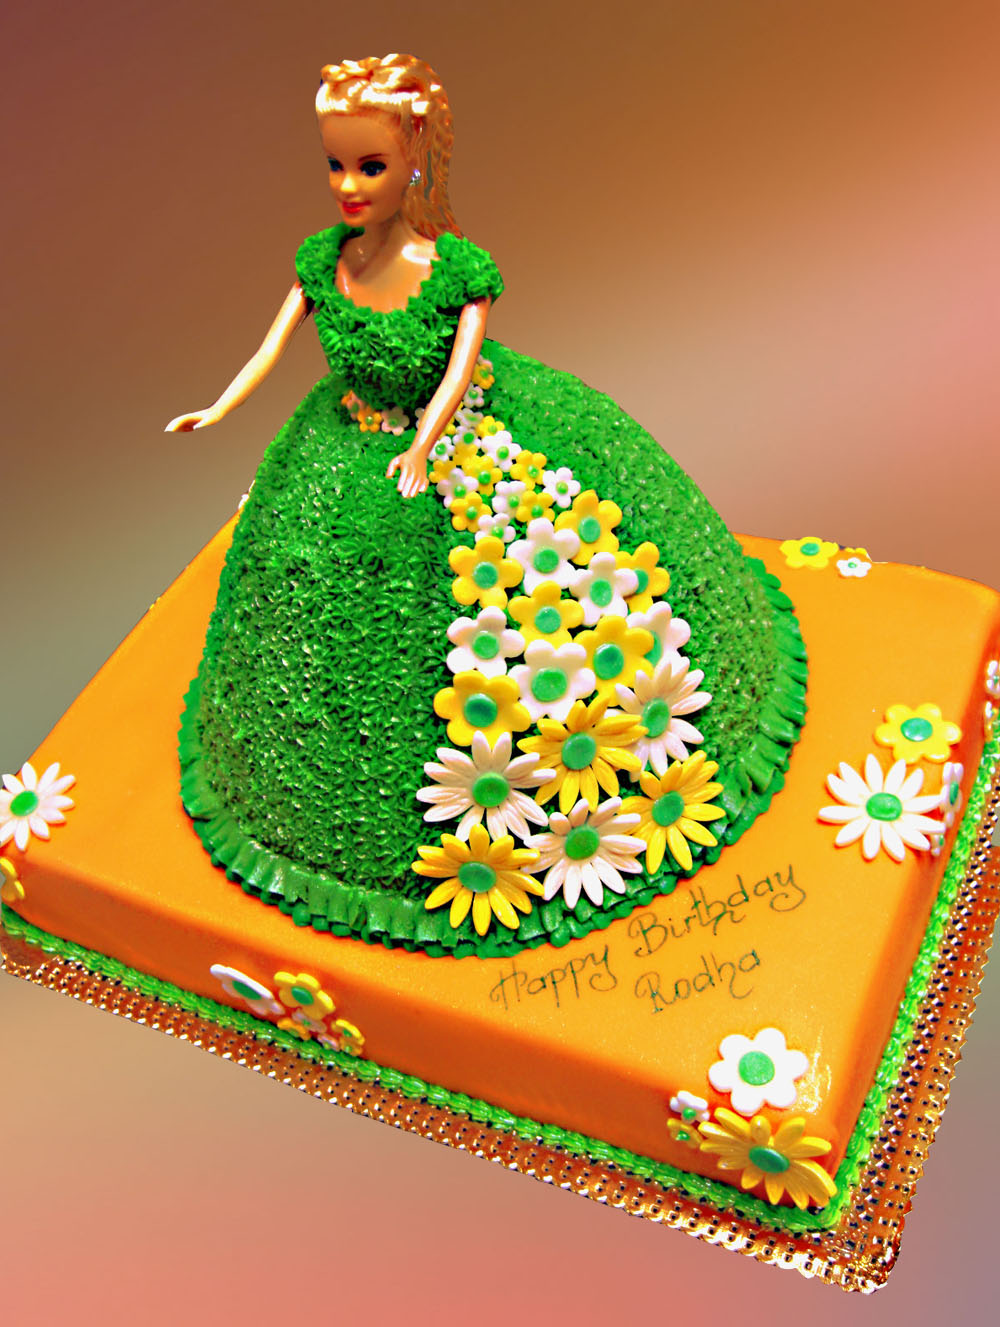 Barbie Cakes - Decoration Ideas | Little Birthday Cakes